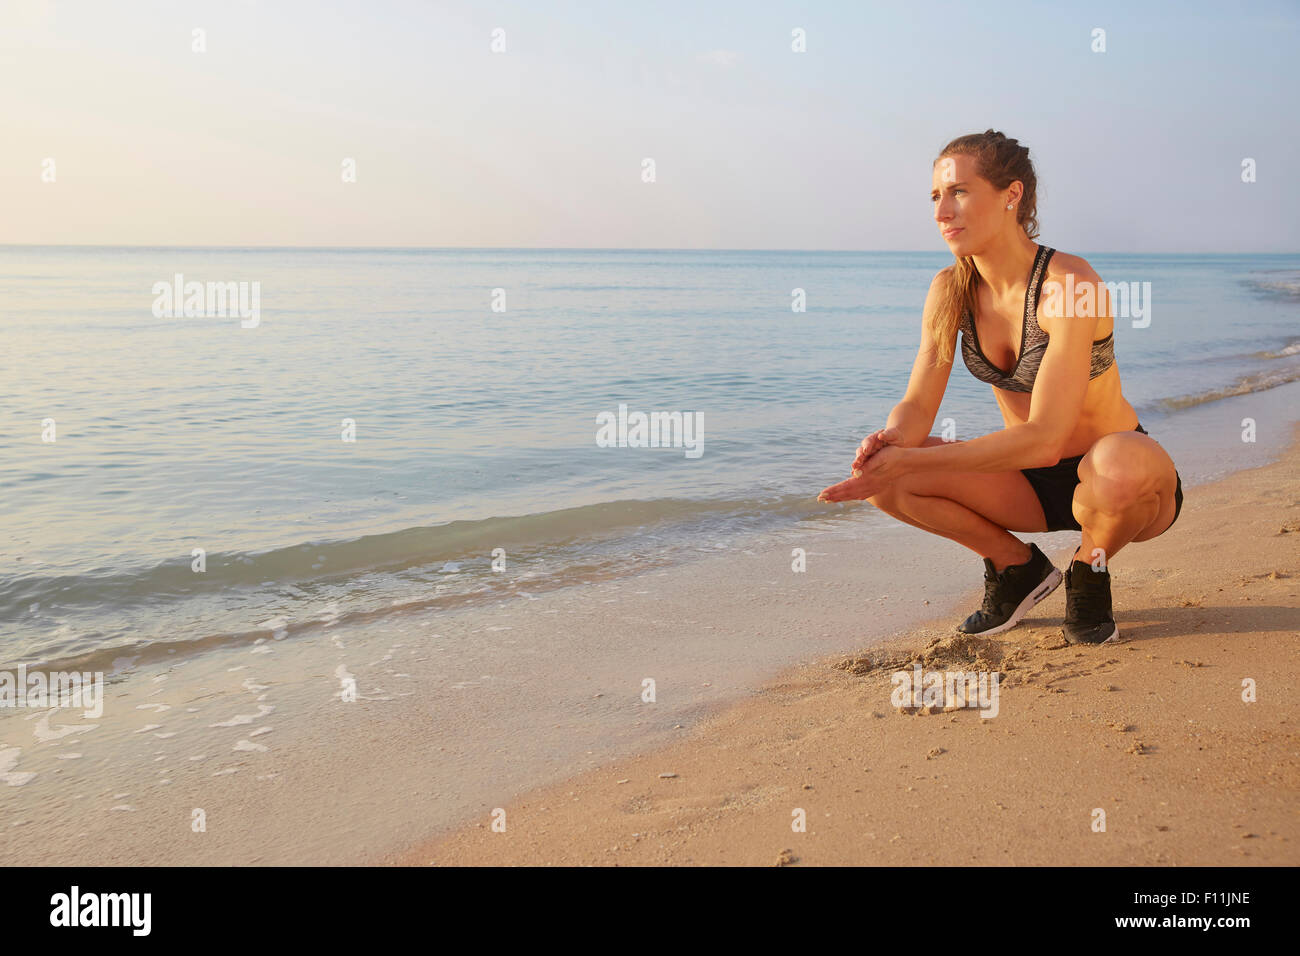 Athlete crouching on beach Stock Photo